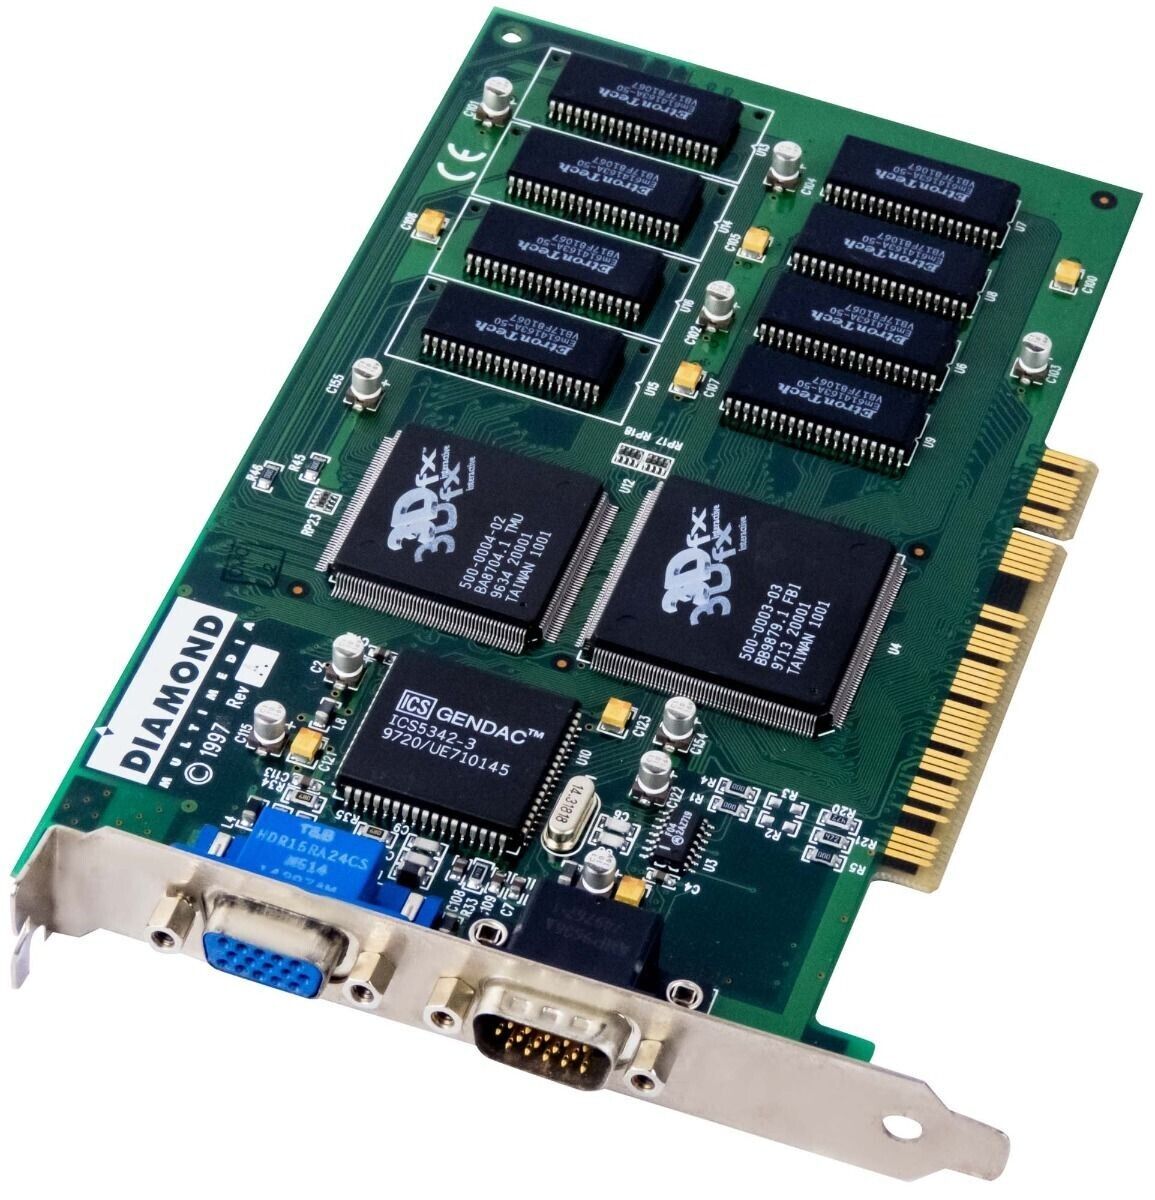 RETRO DIAMOND MONSTER 3D 3DFX VOODOO 4MB PCI 23150002-402 GRAPHICS CARD